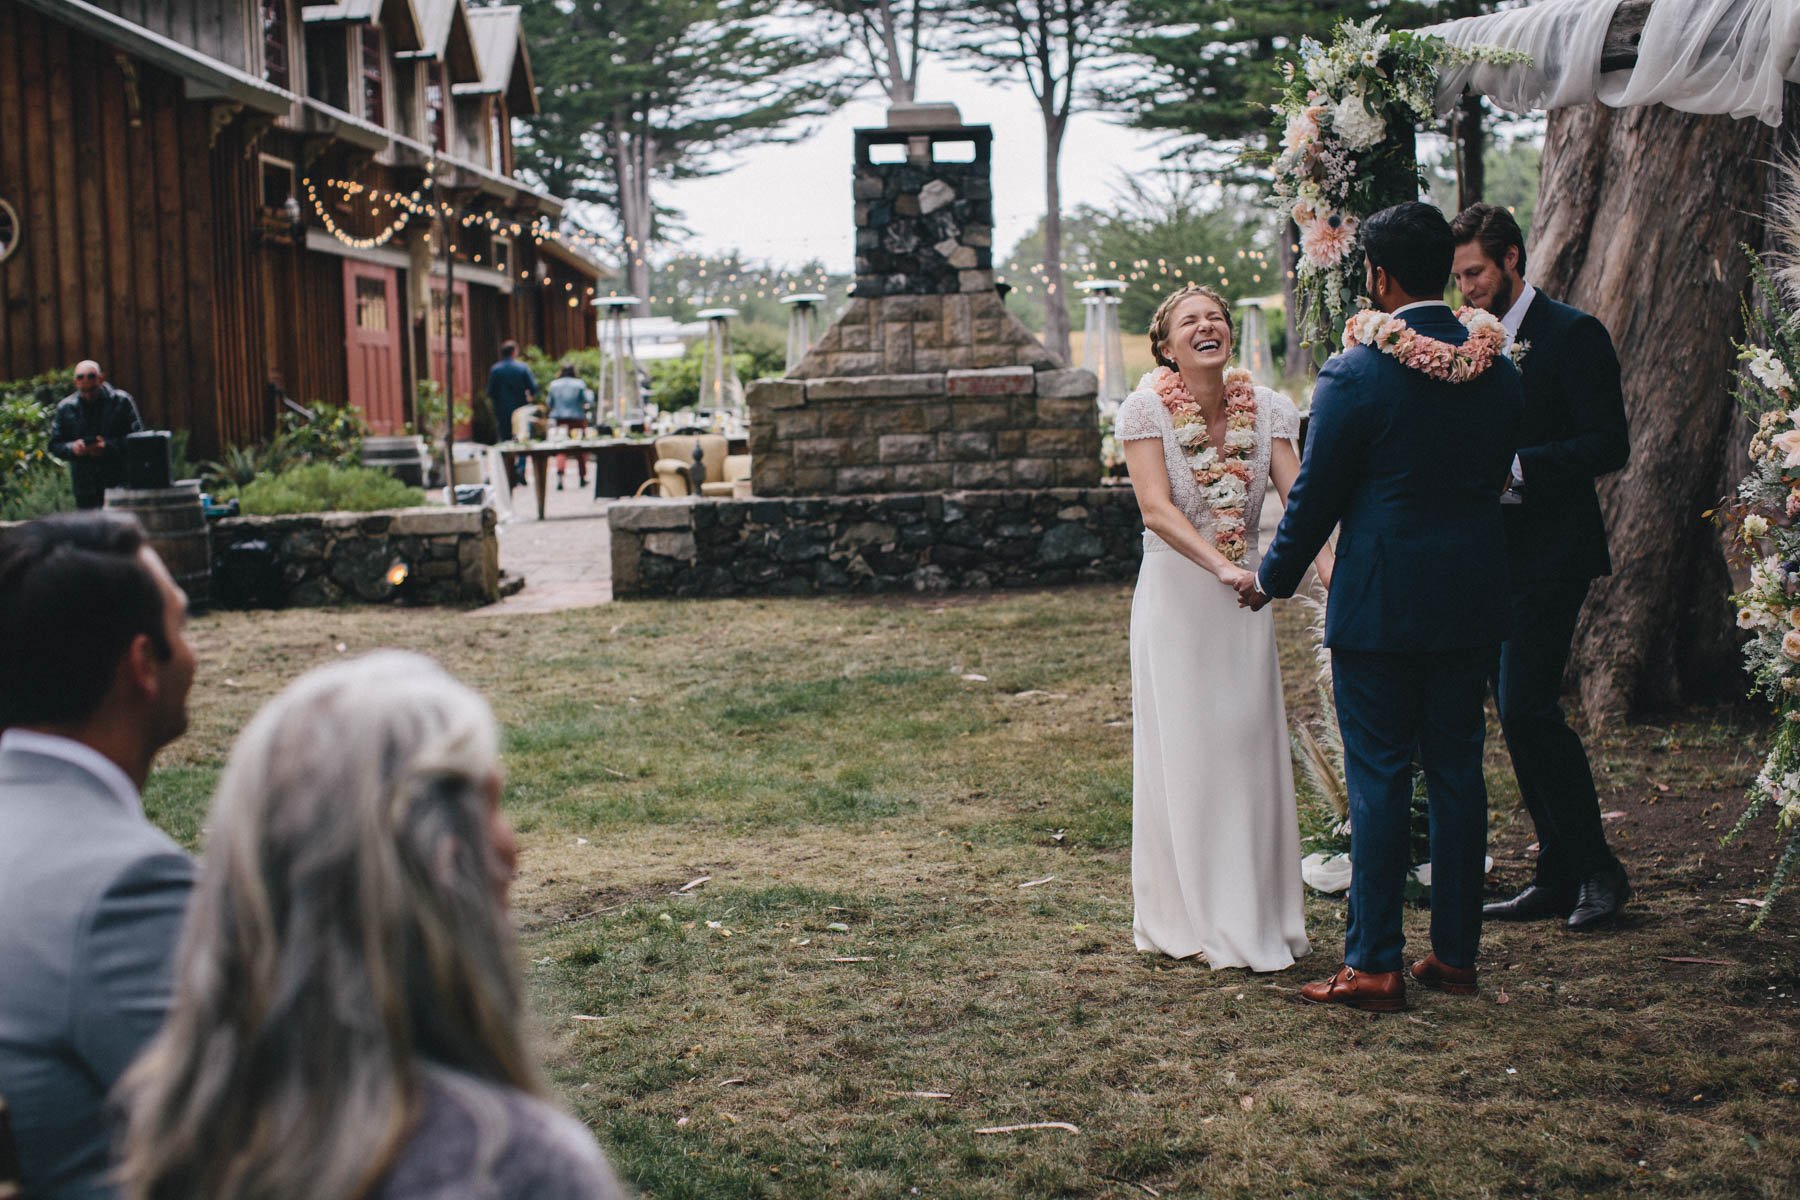 Exchanging wedding vows at Spring Ranch Mendocino